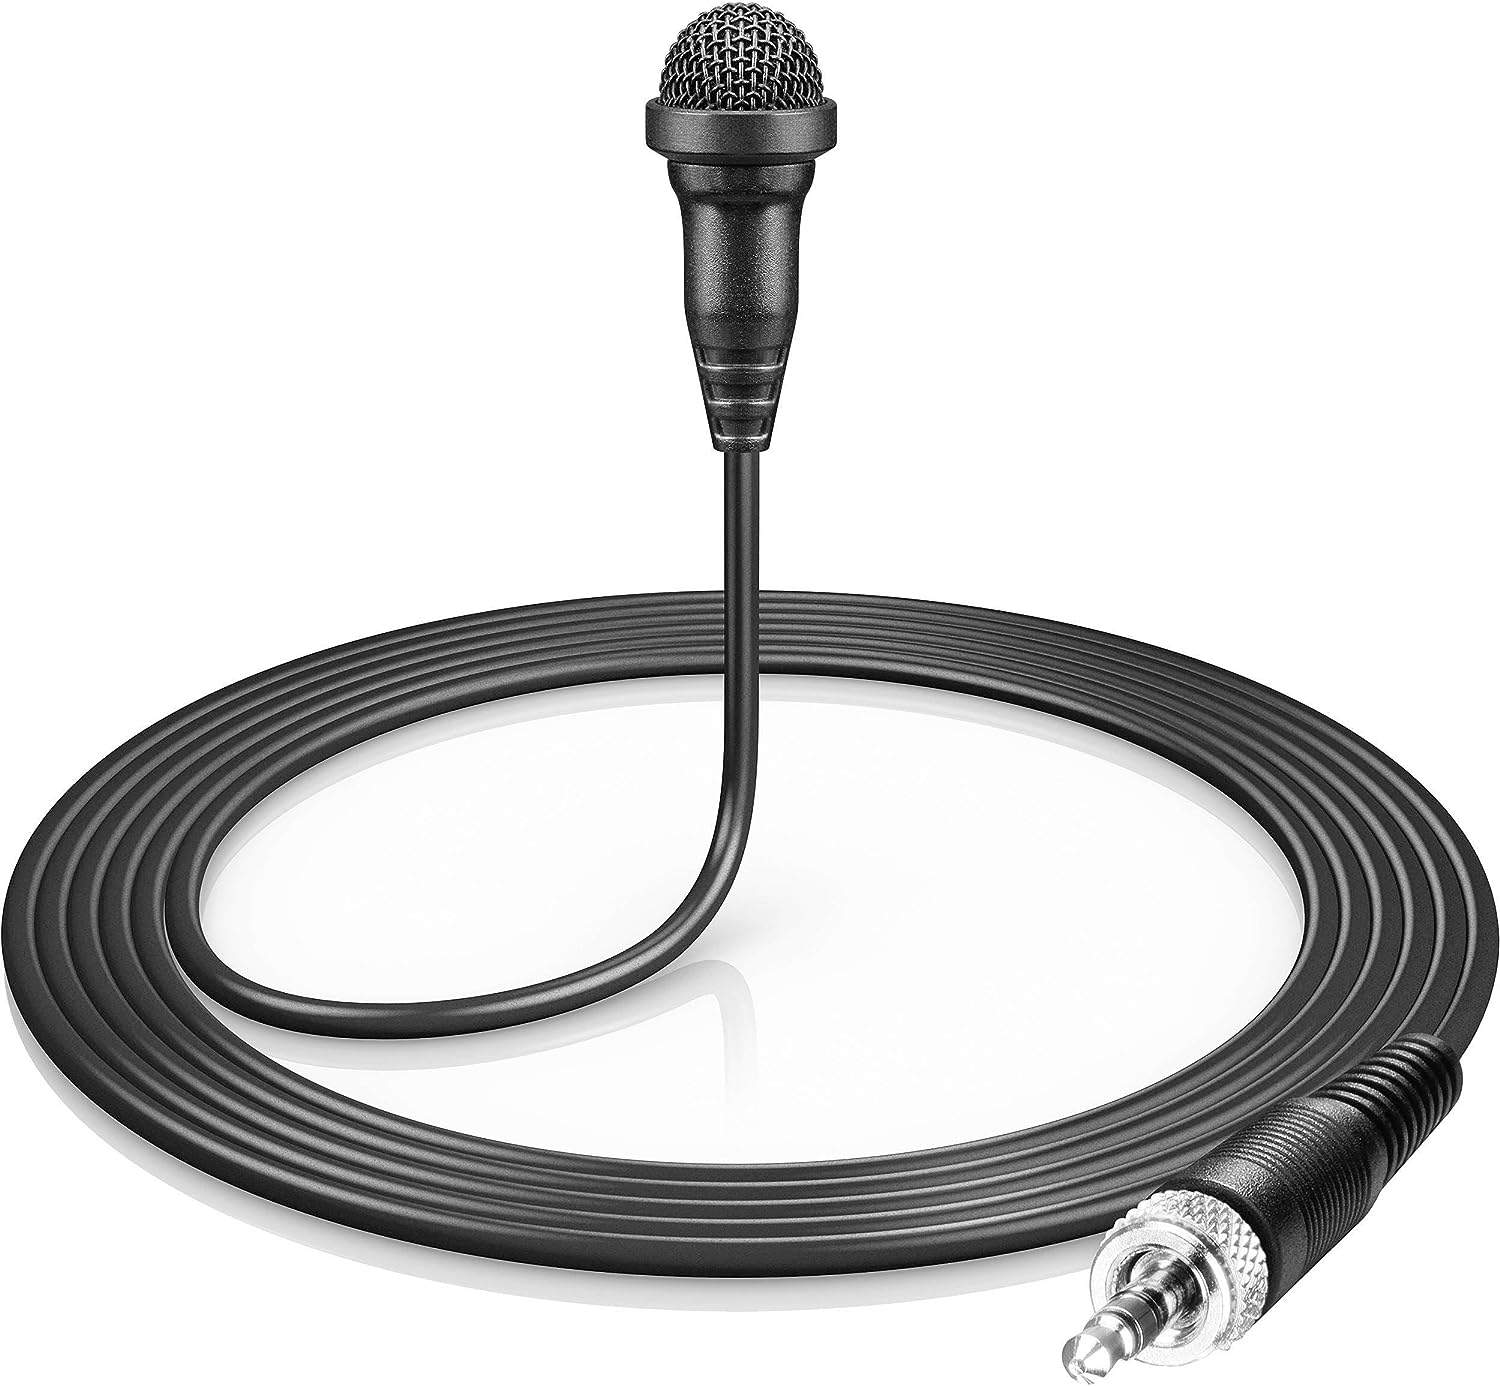 Sennheiser Pro Audio EW 112P G4 � A Omni-directional Wireless Lavalier Microphone System